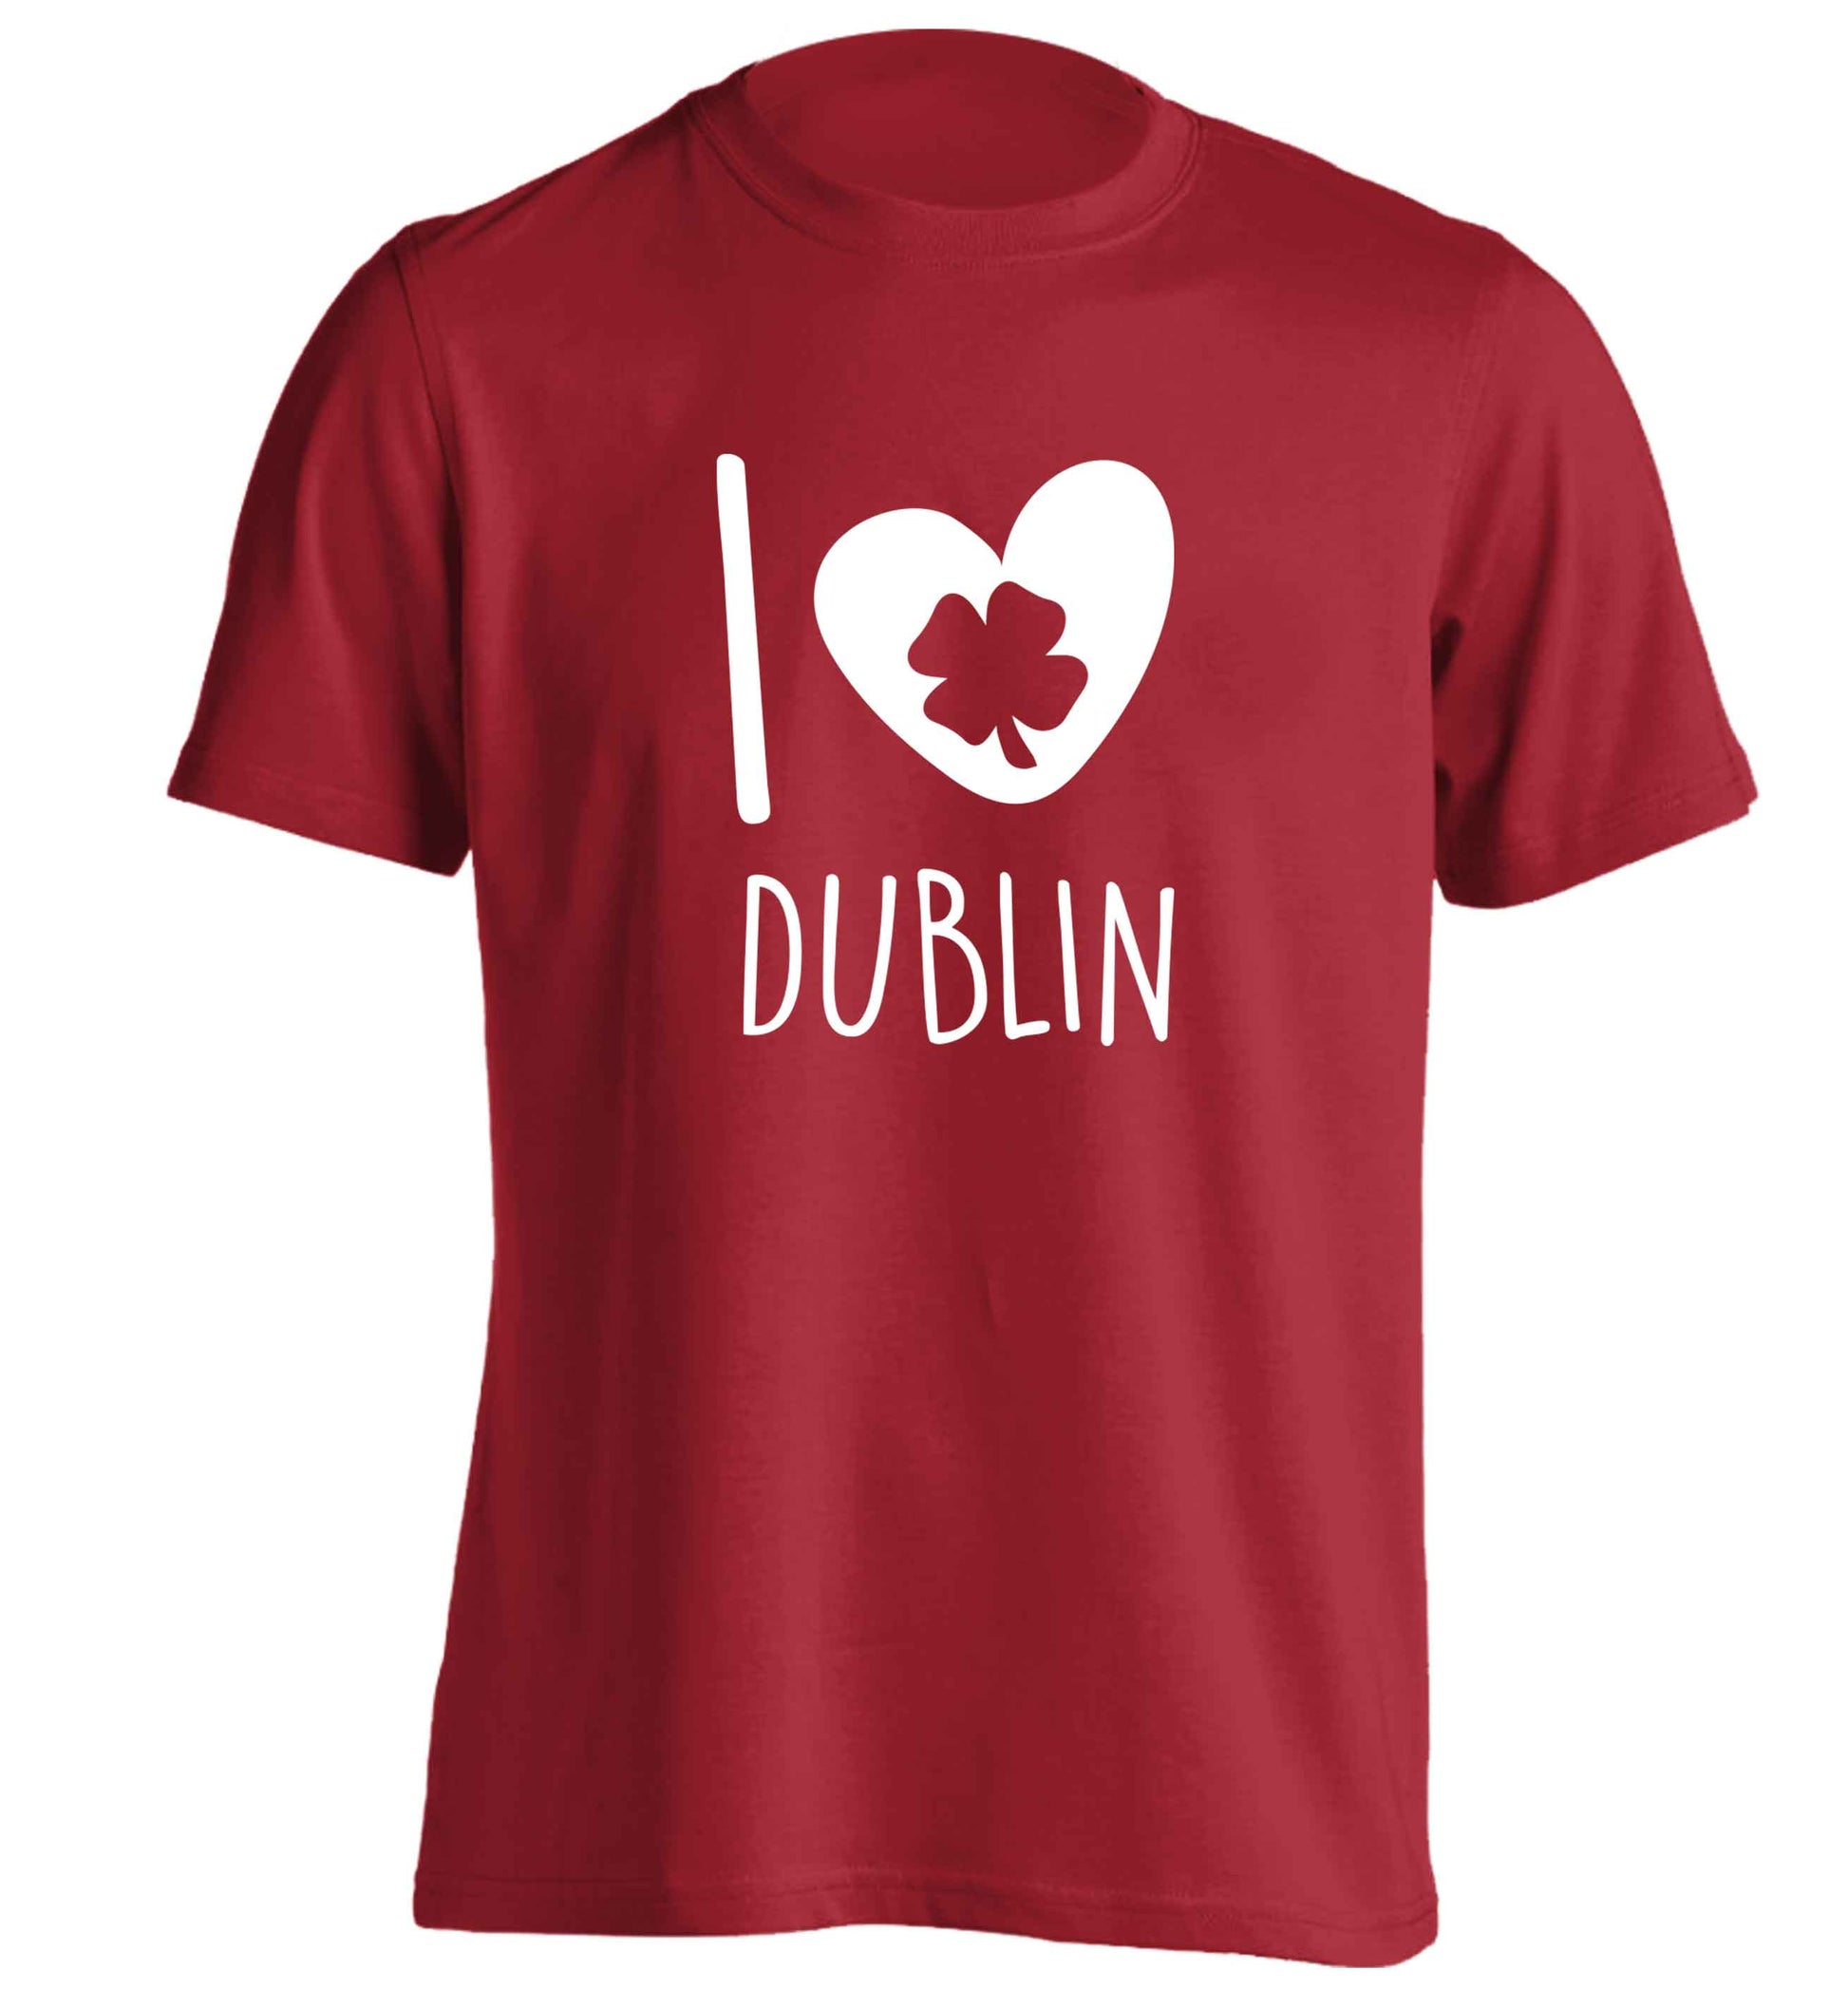 I love Dublin adults unisex red Tshirt 2XL